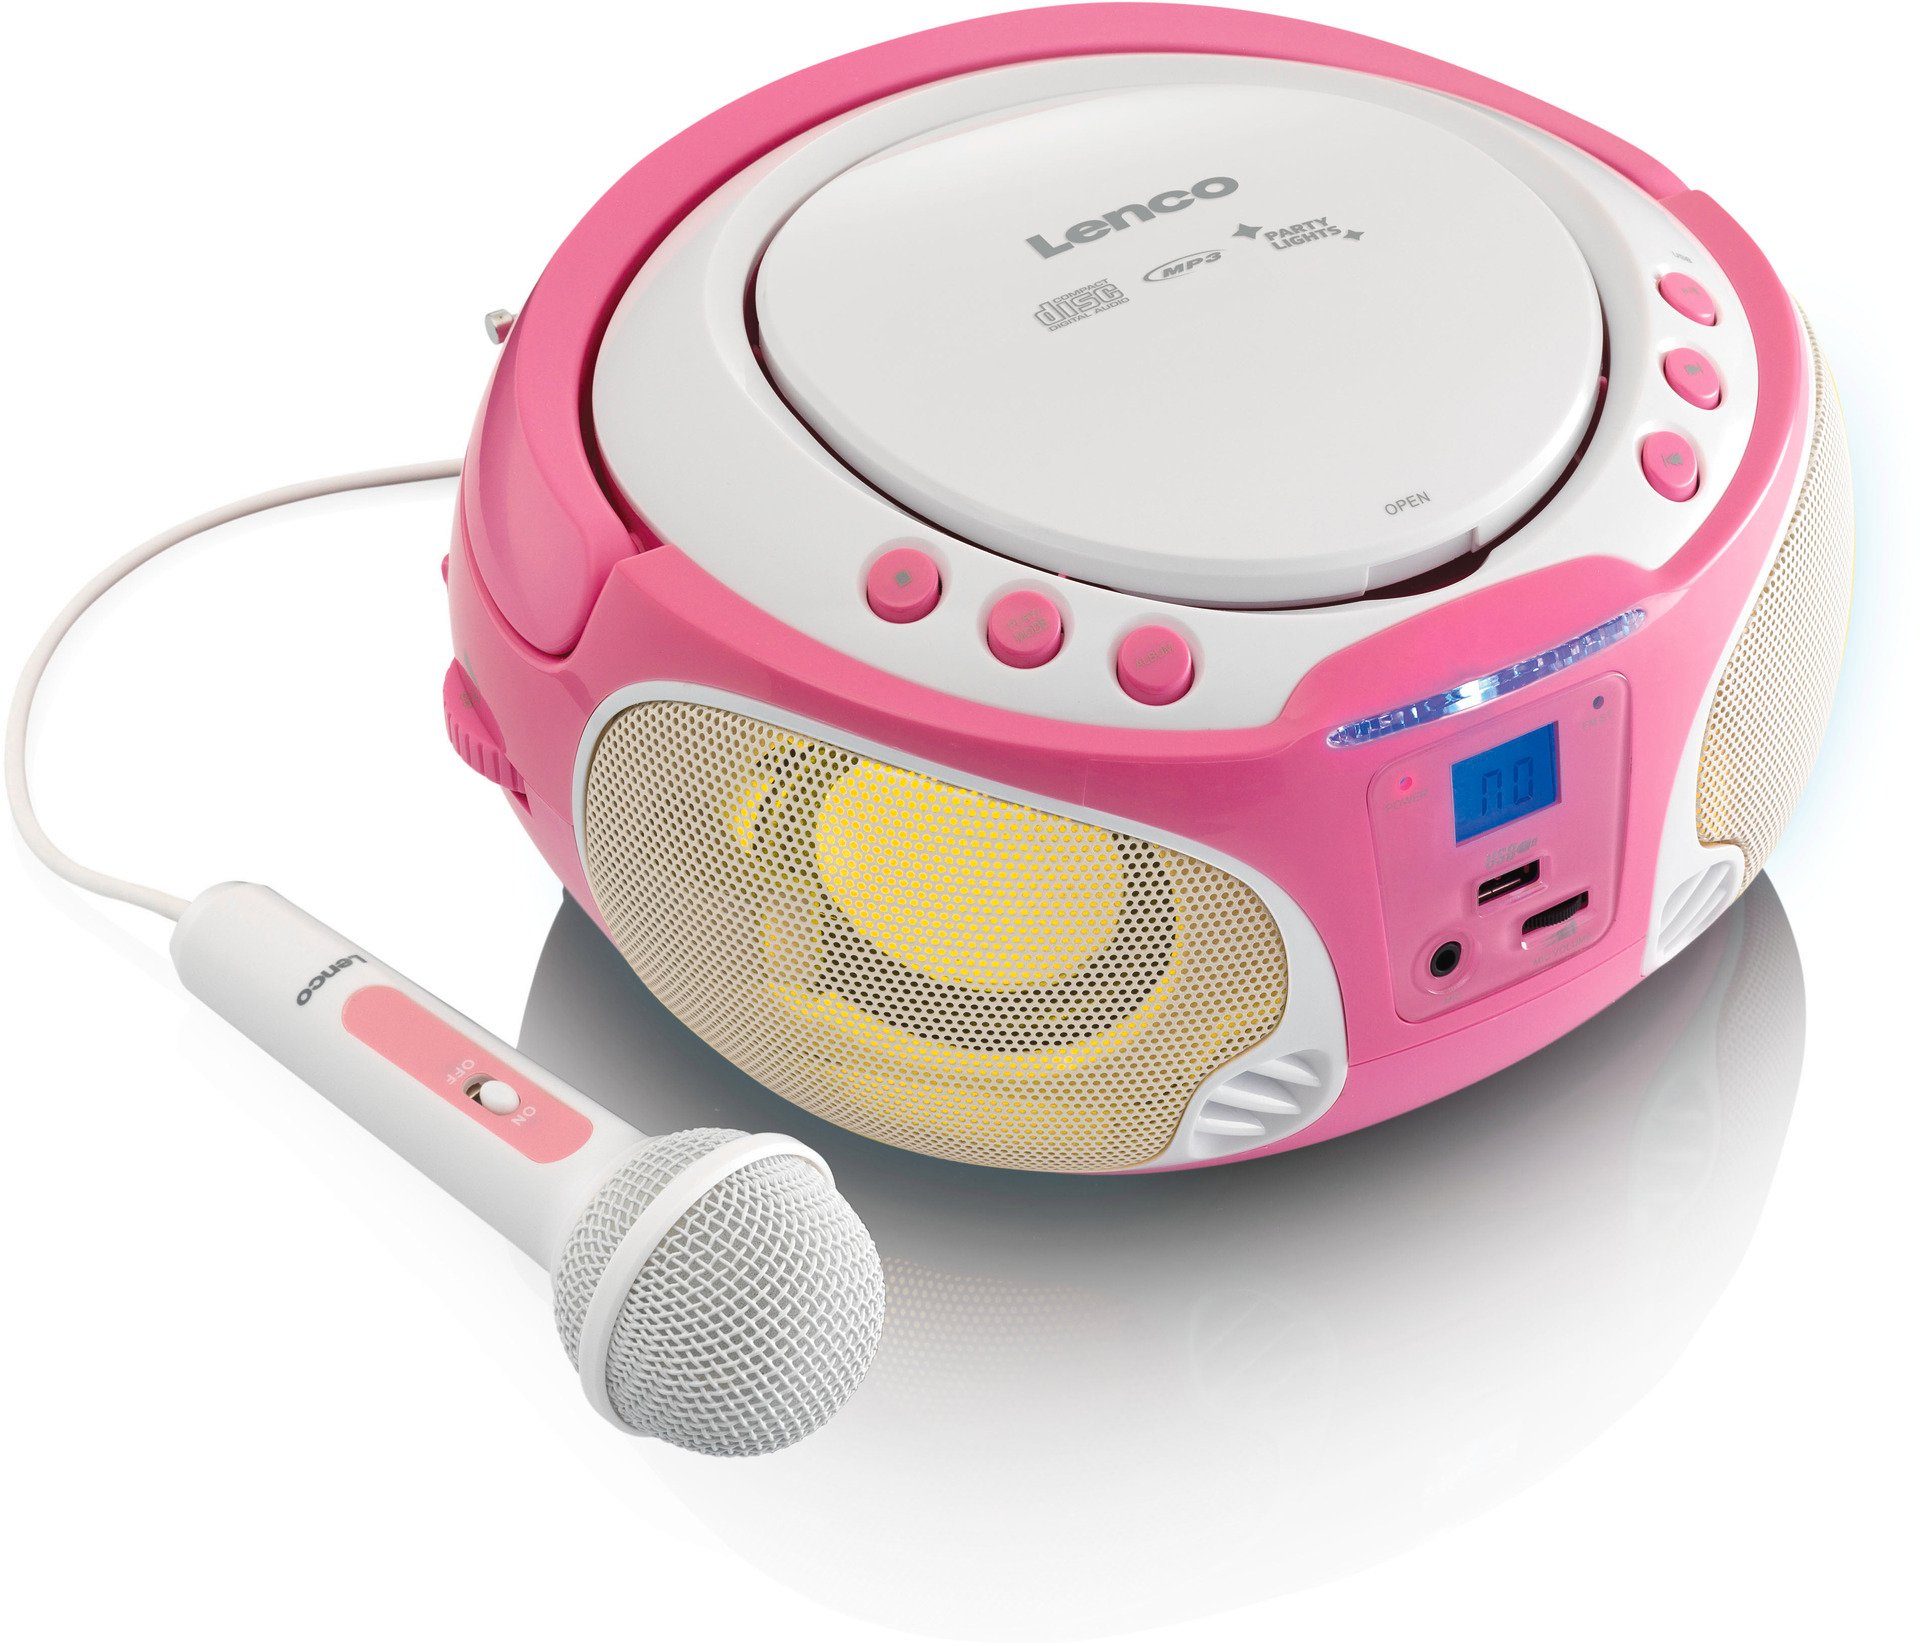 Lenco SCD-650BU CD-Radio m. MP3, USB, Lichteffekt, Mikro Boombox Pink